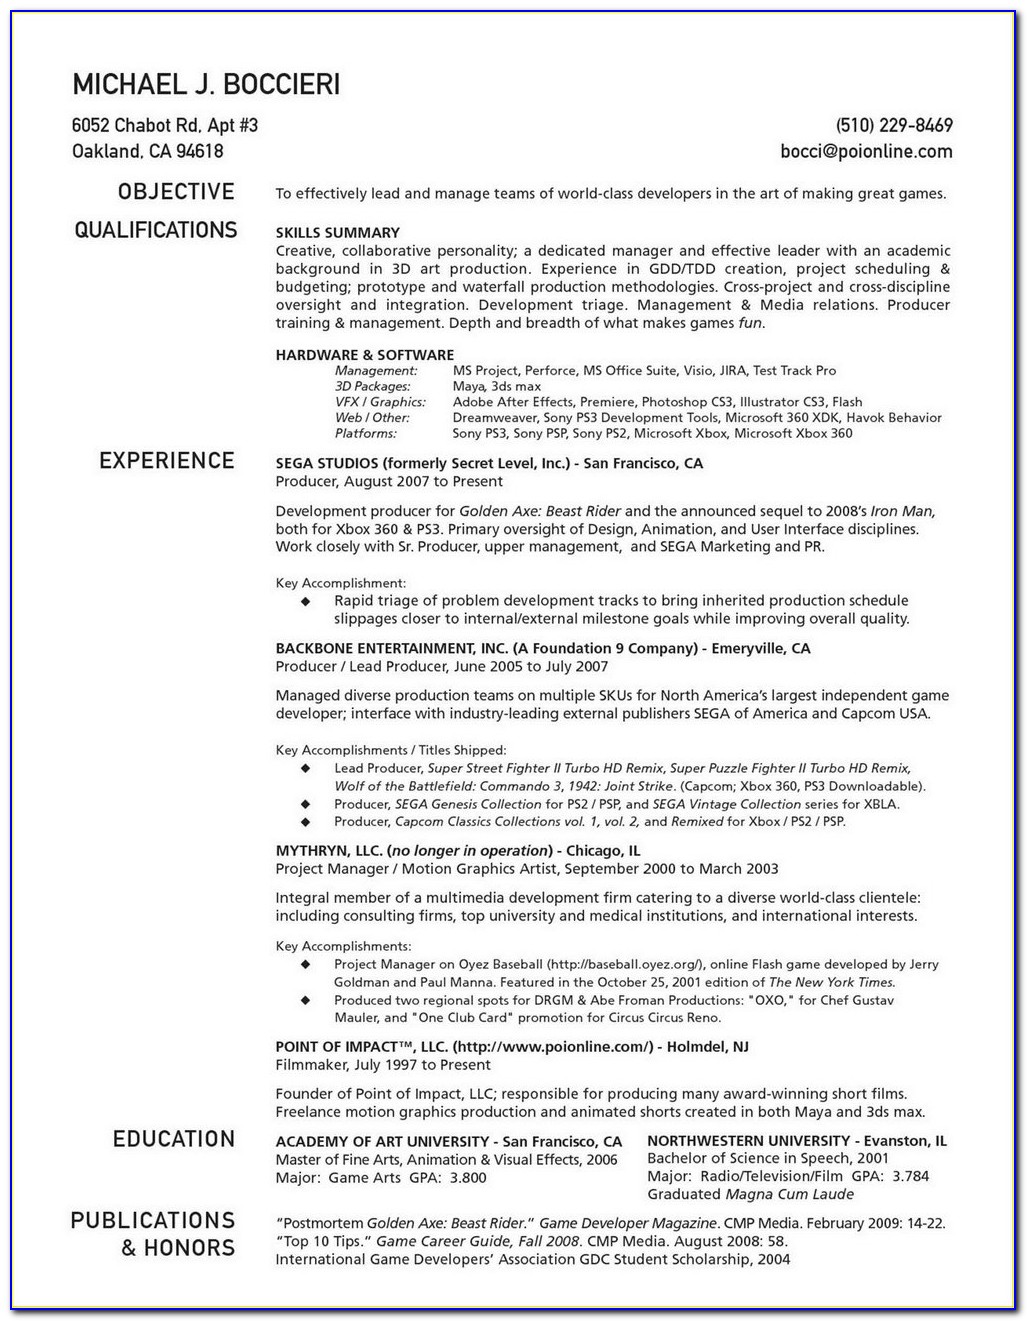 Resume Format Job Application Free Download